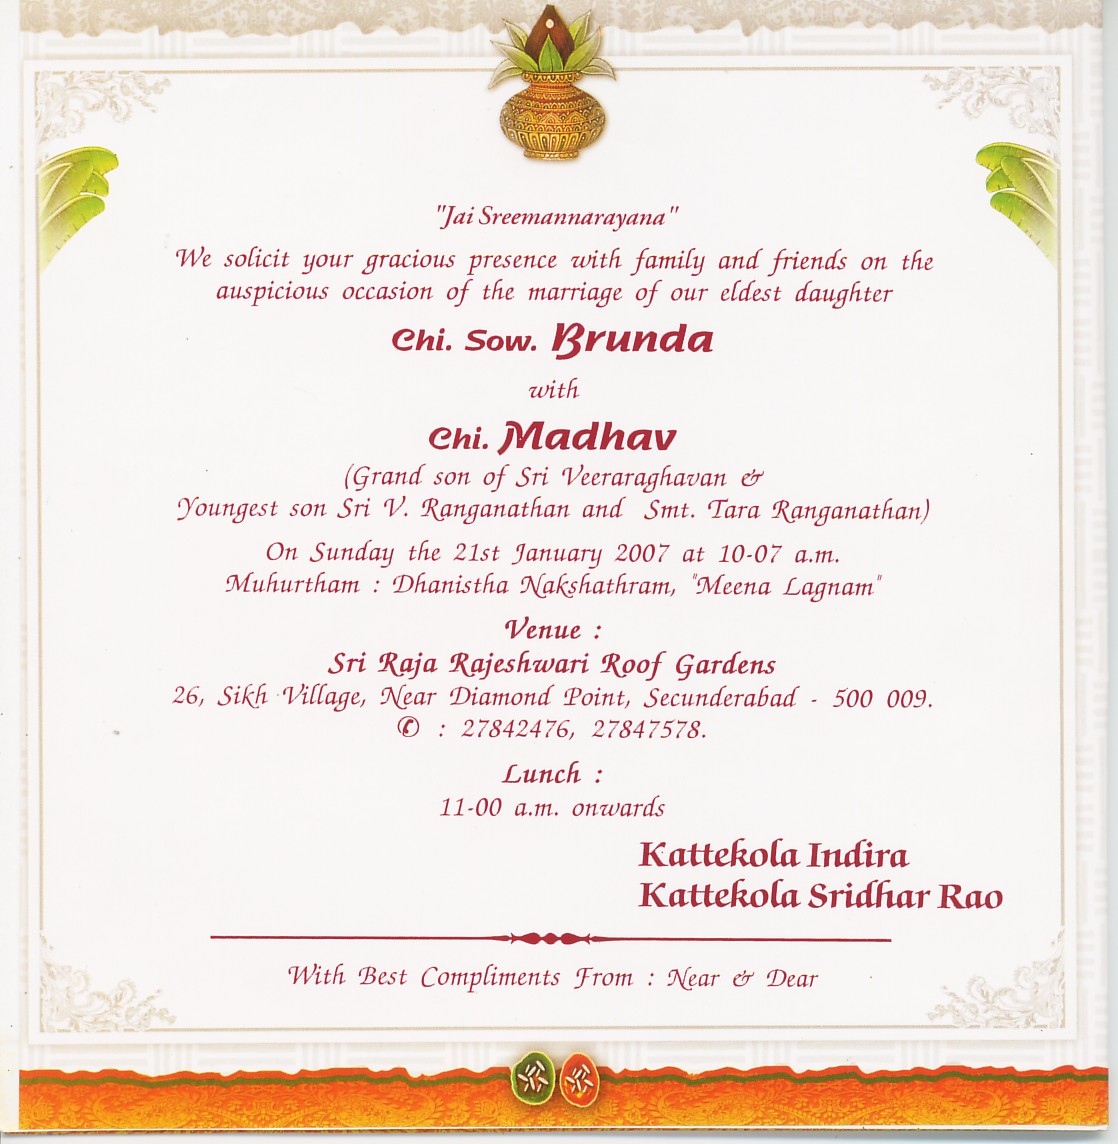 wedding invitation : Sample wedding invitation card - New ...